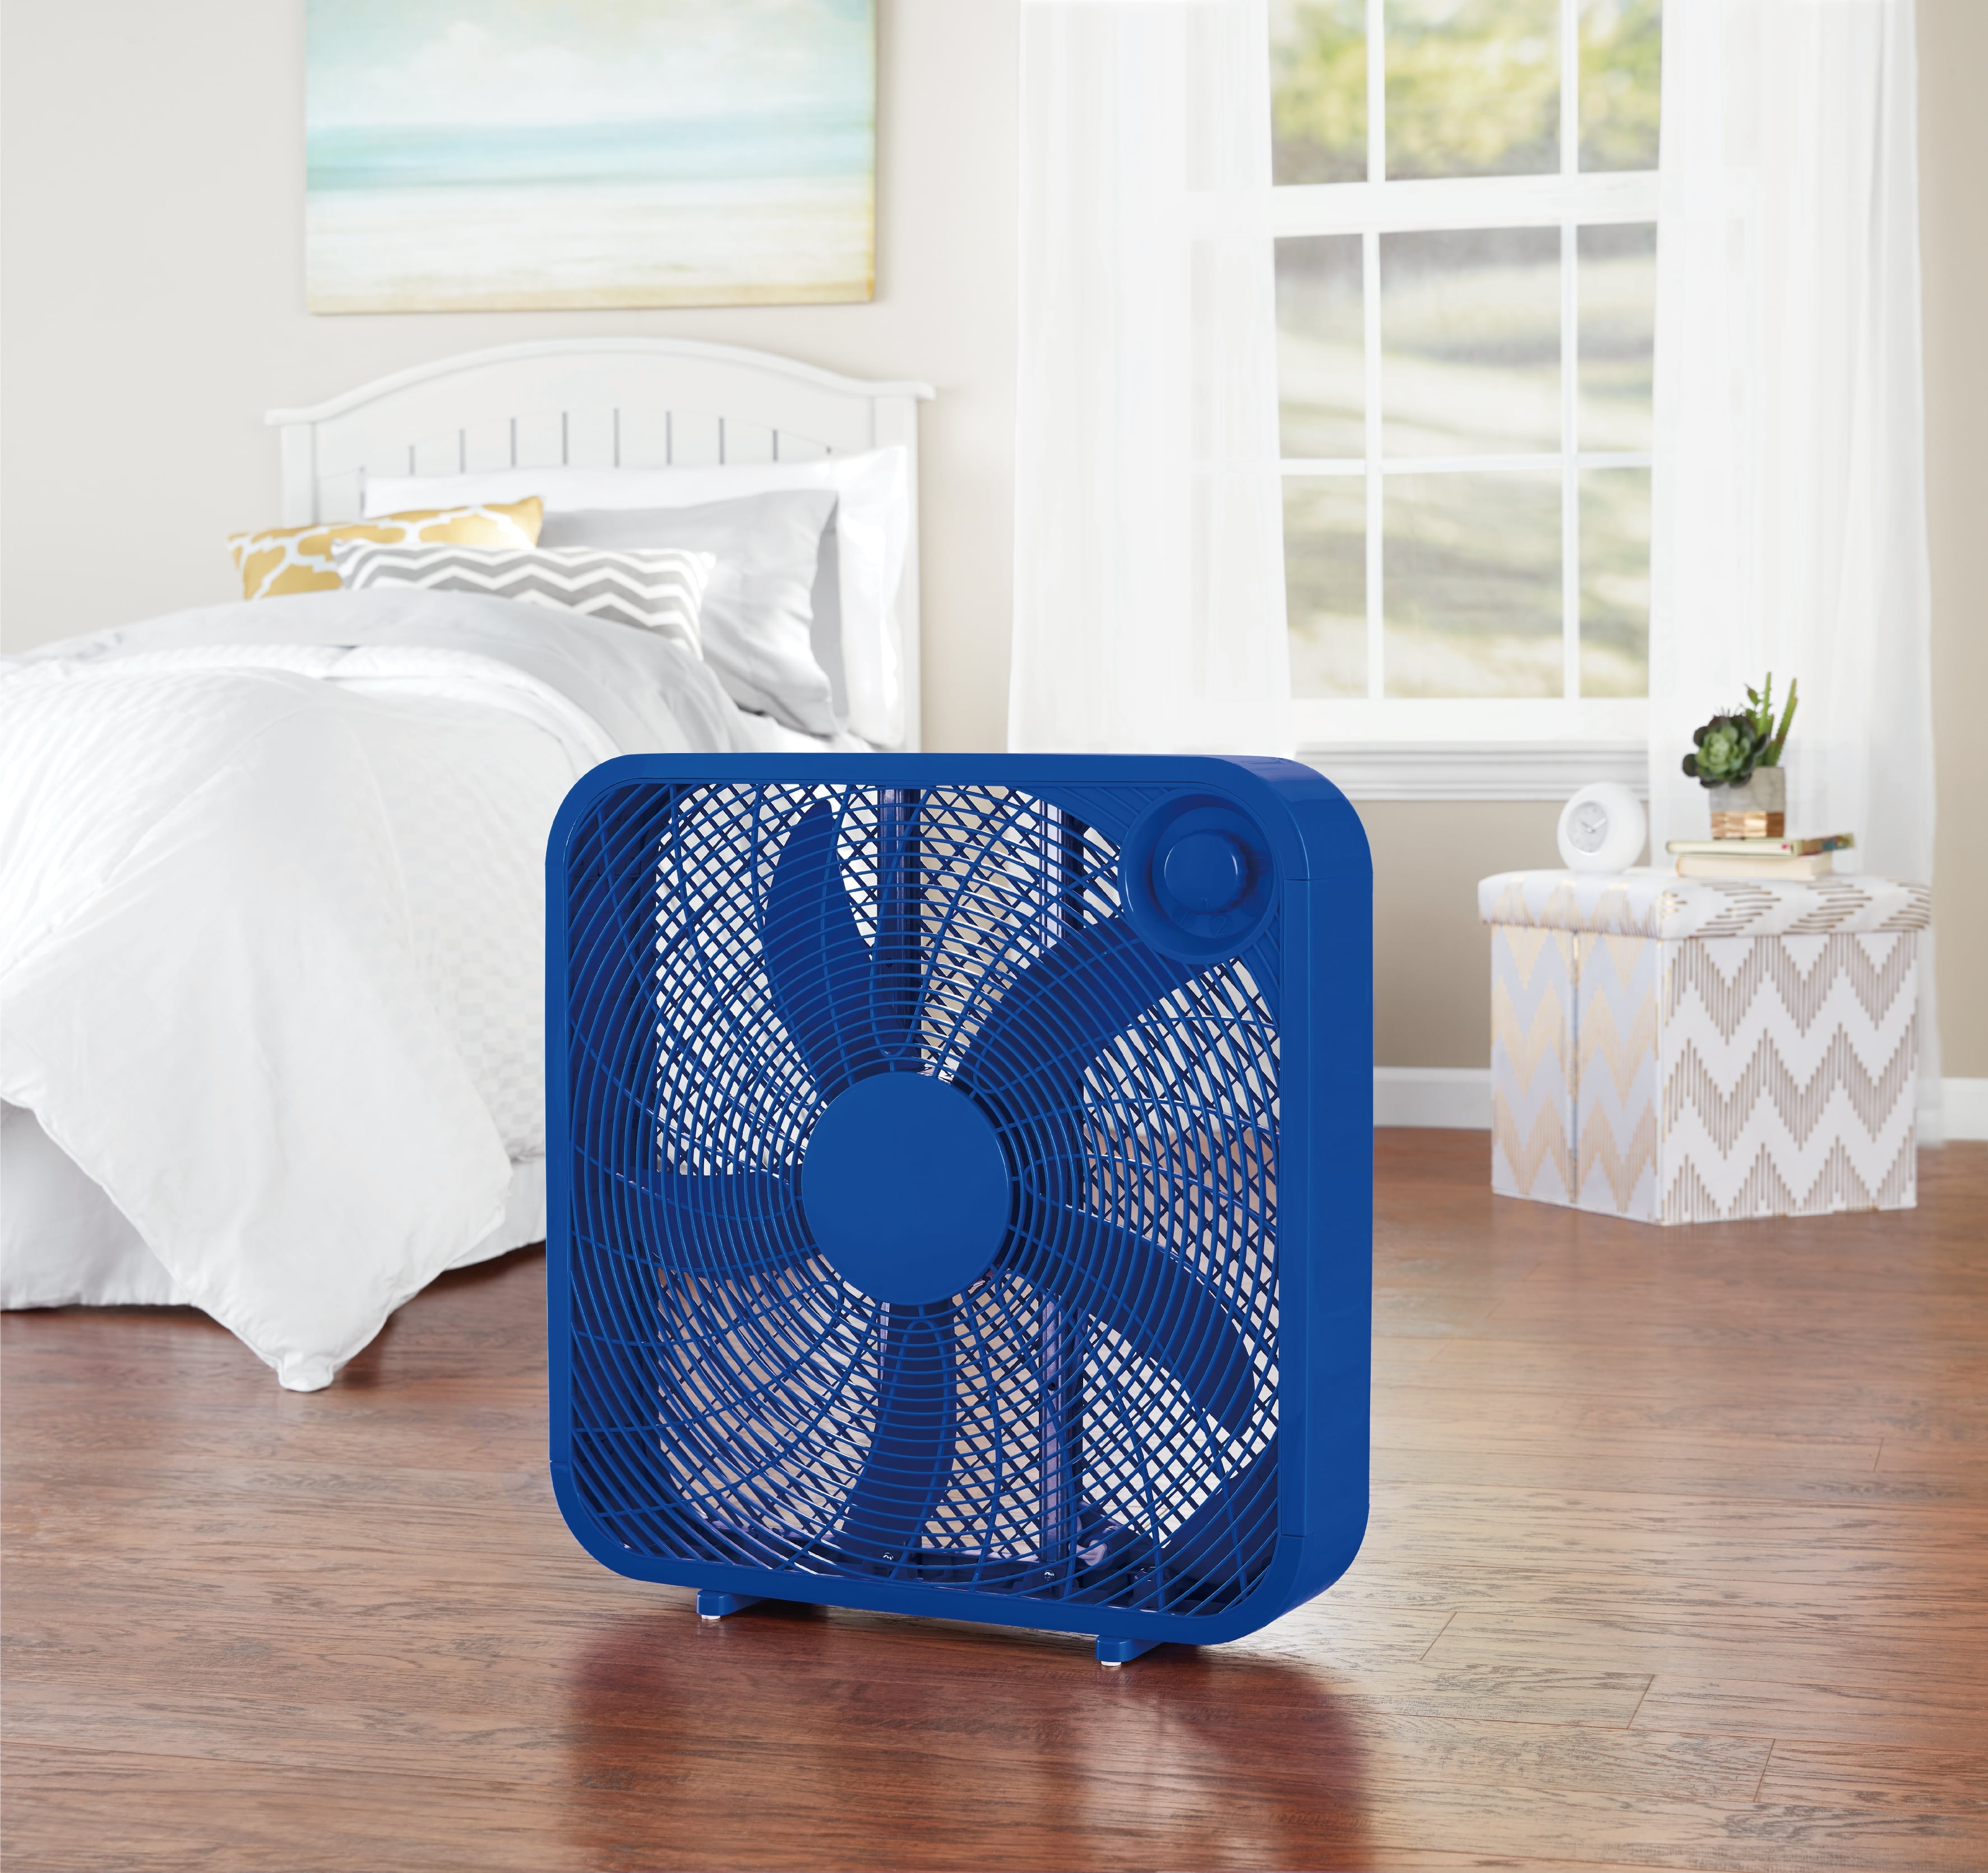 Mainstays 20-inch 3-Speed Box Fan, Model# FB50-16HL, Blue - image 2 of 5